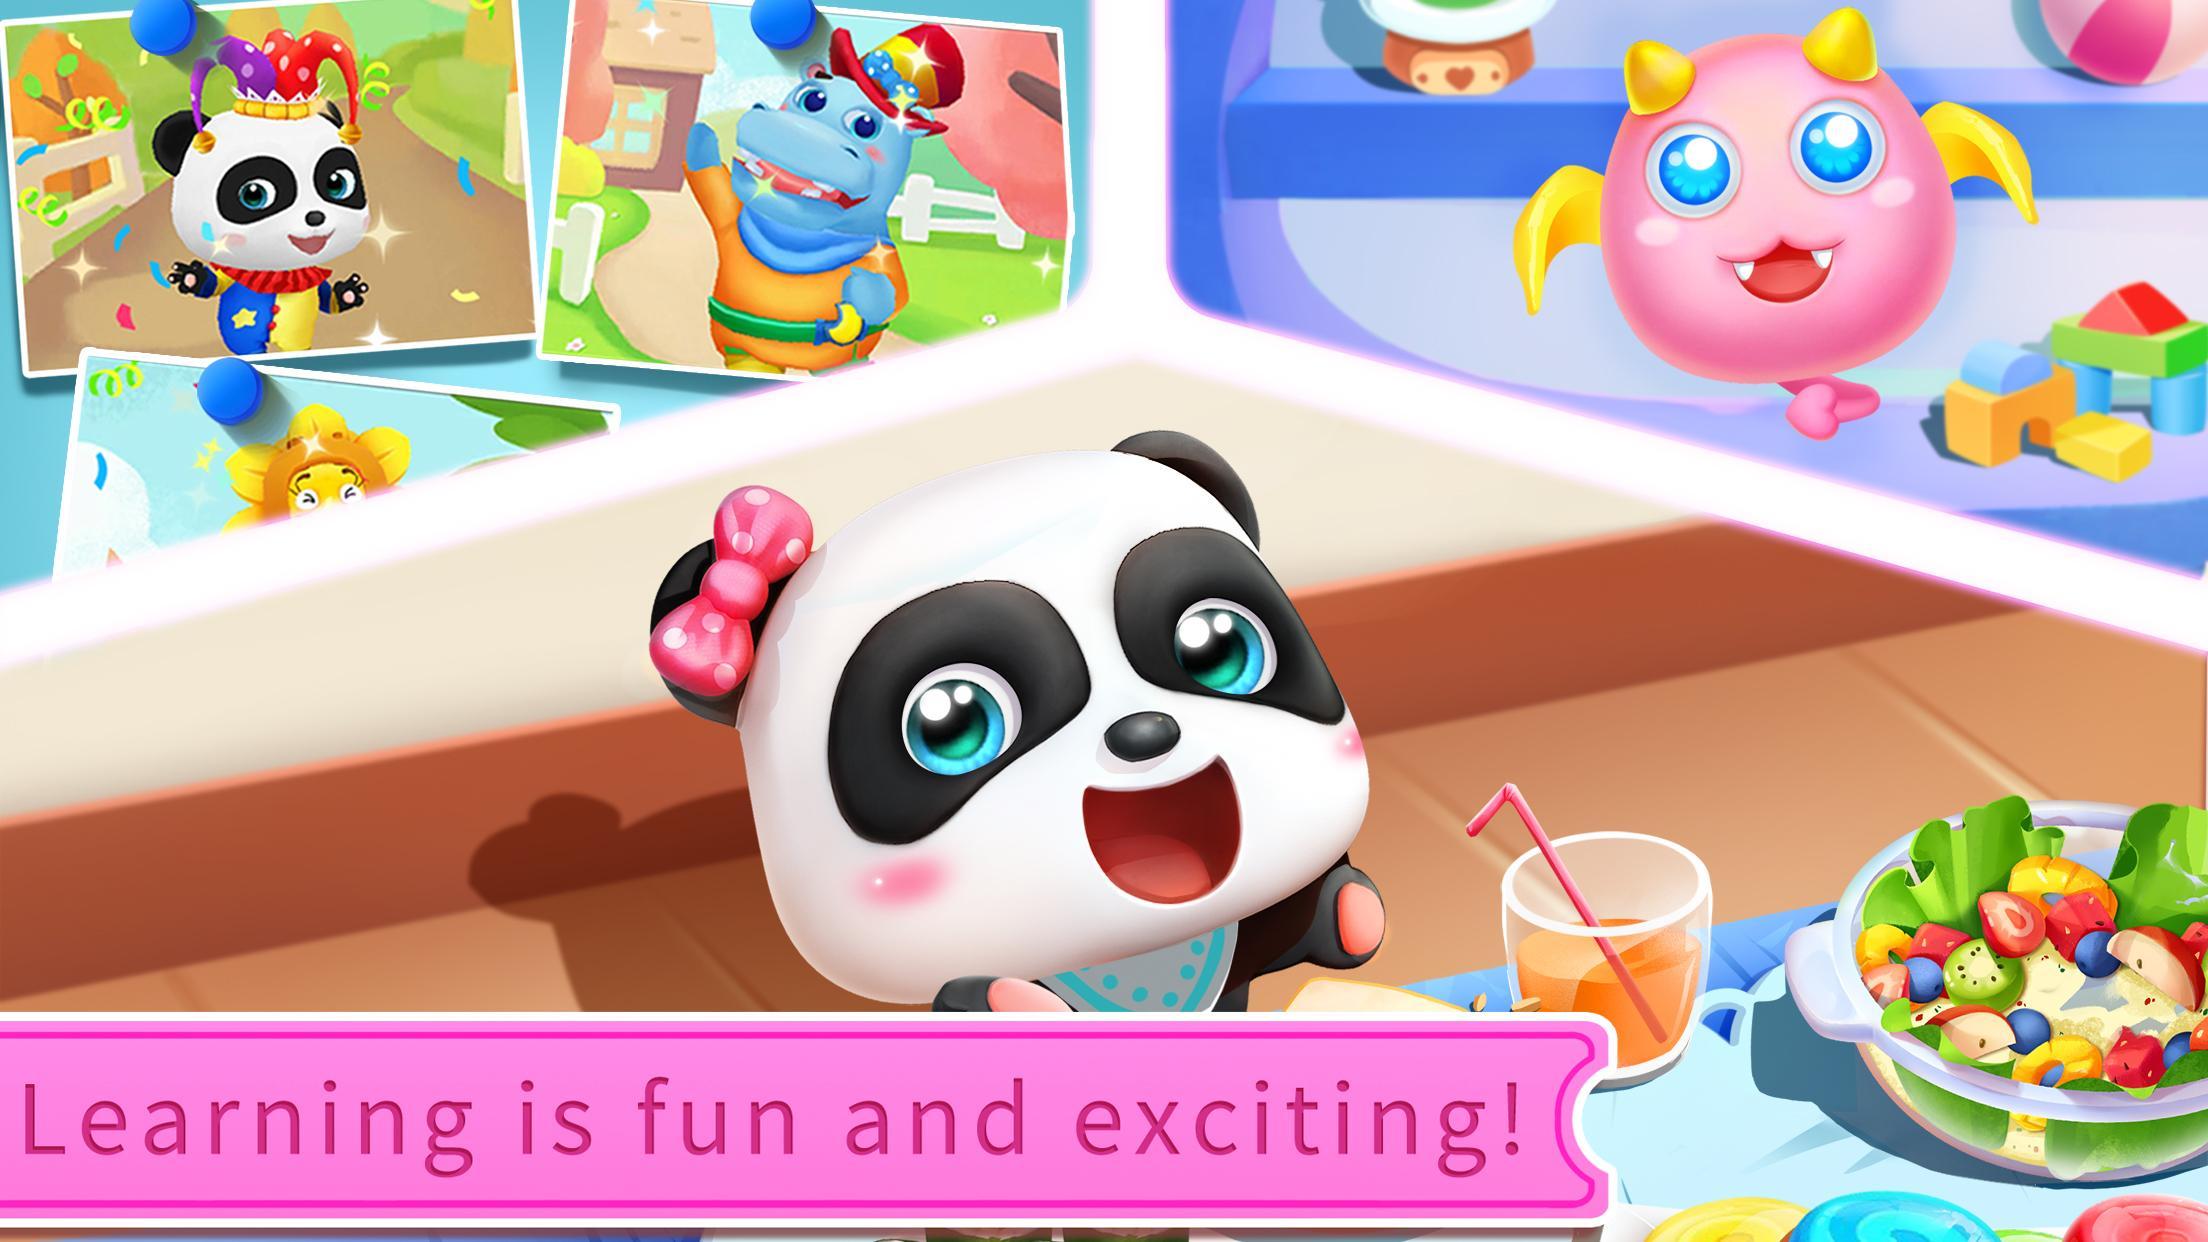 Baby Panda’s School Bus - Let's Drive! 8.51.00.03 Screenshot 11